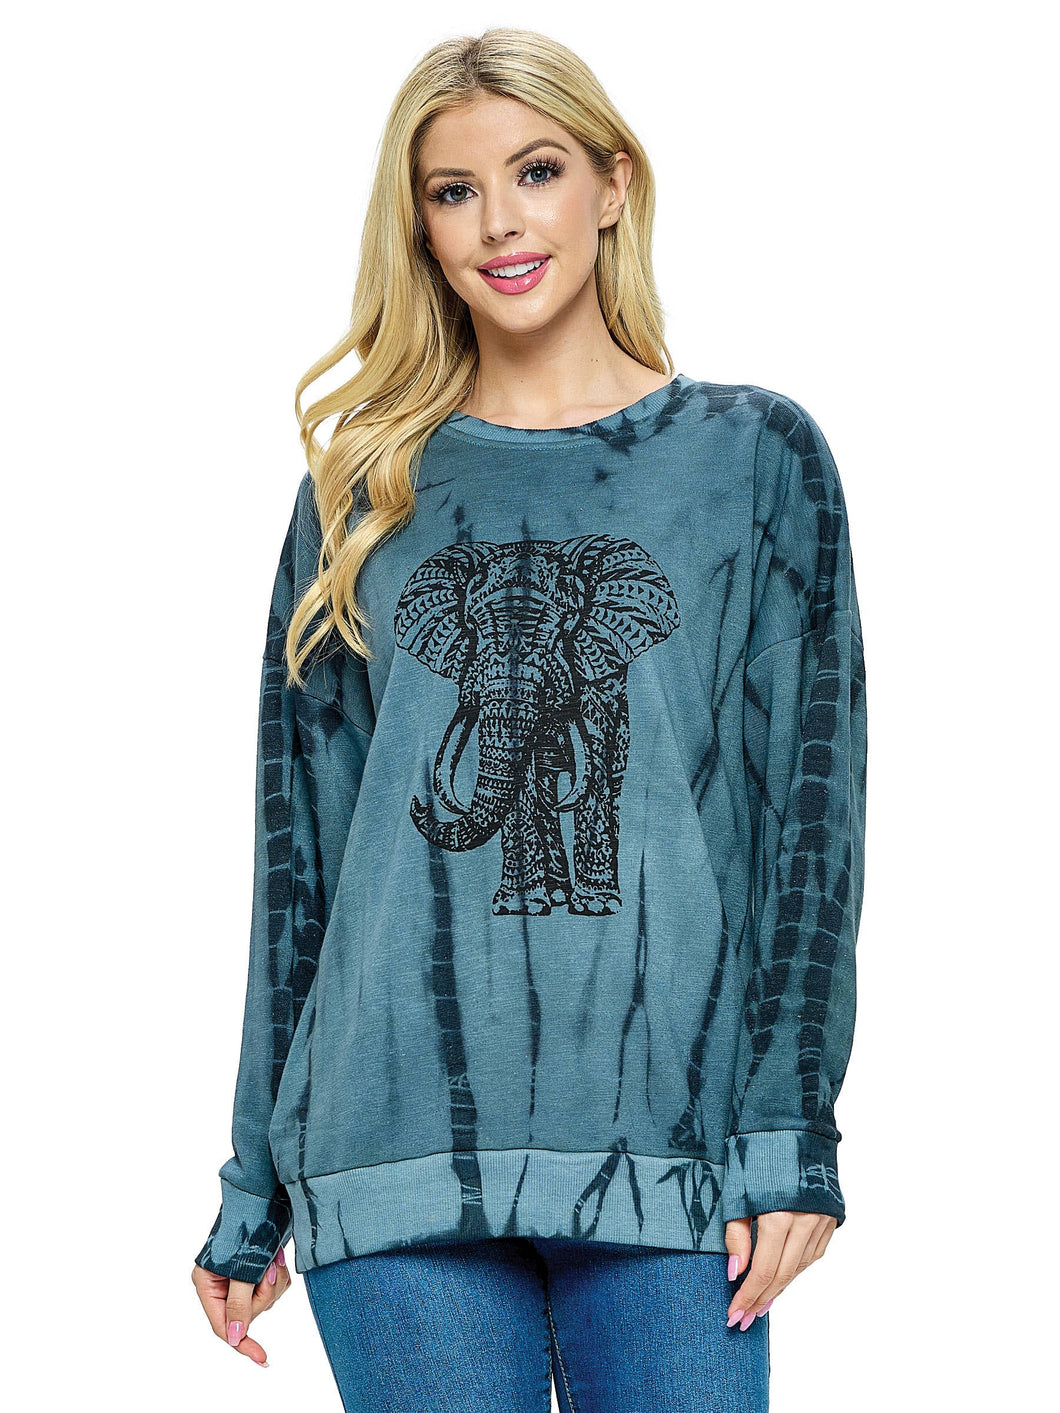 Pullover Top Boho Tie Dye Elephant Print: M/L / Gray / 60% Cotton 40% Polyester